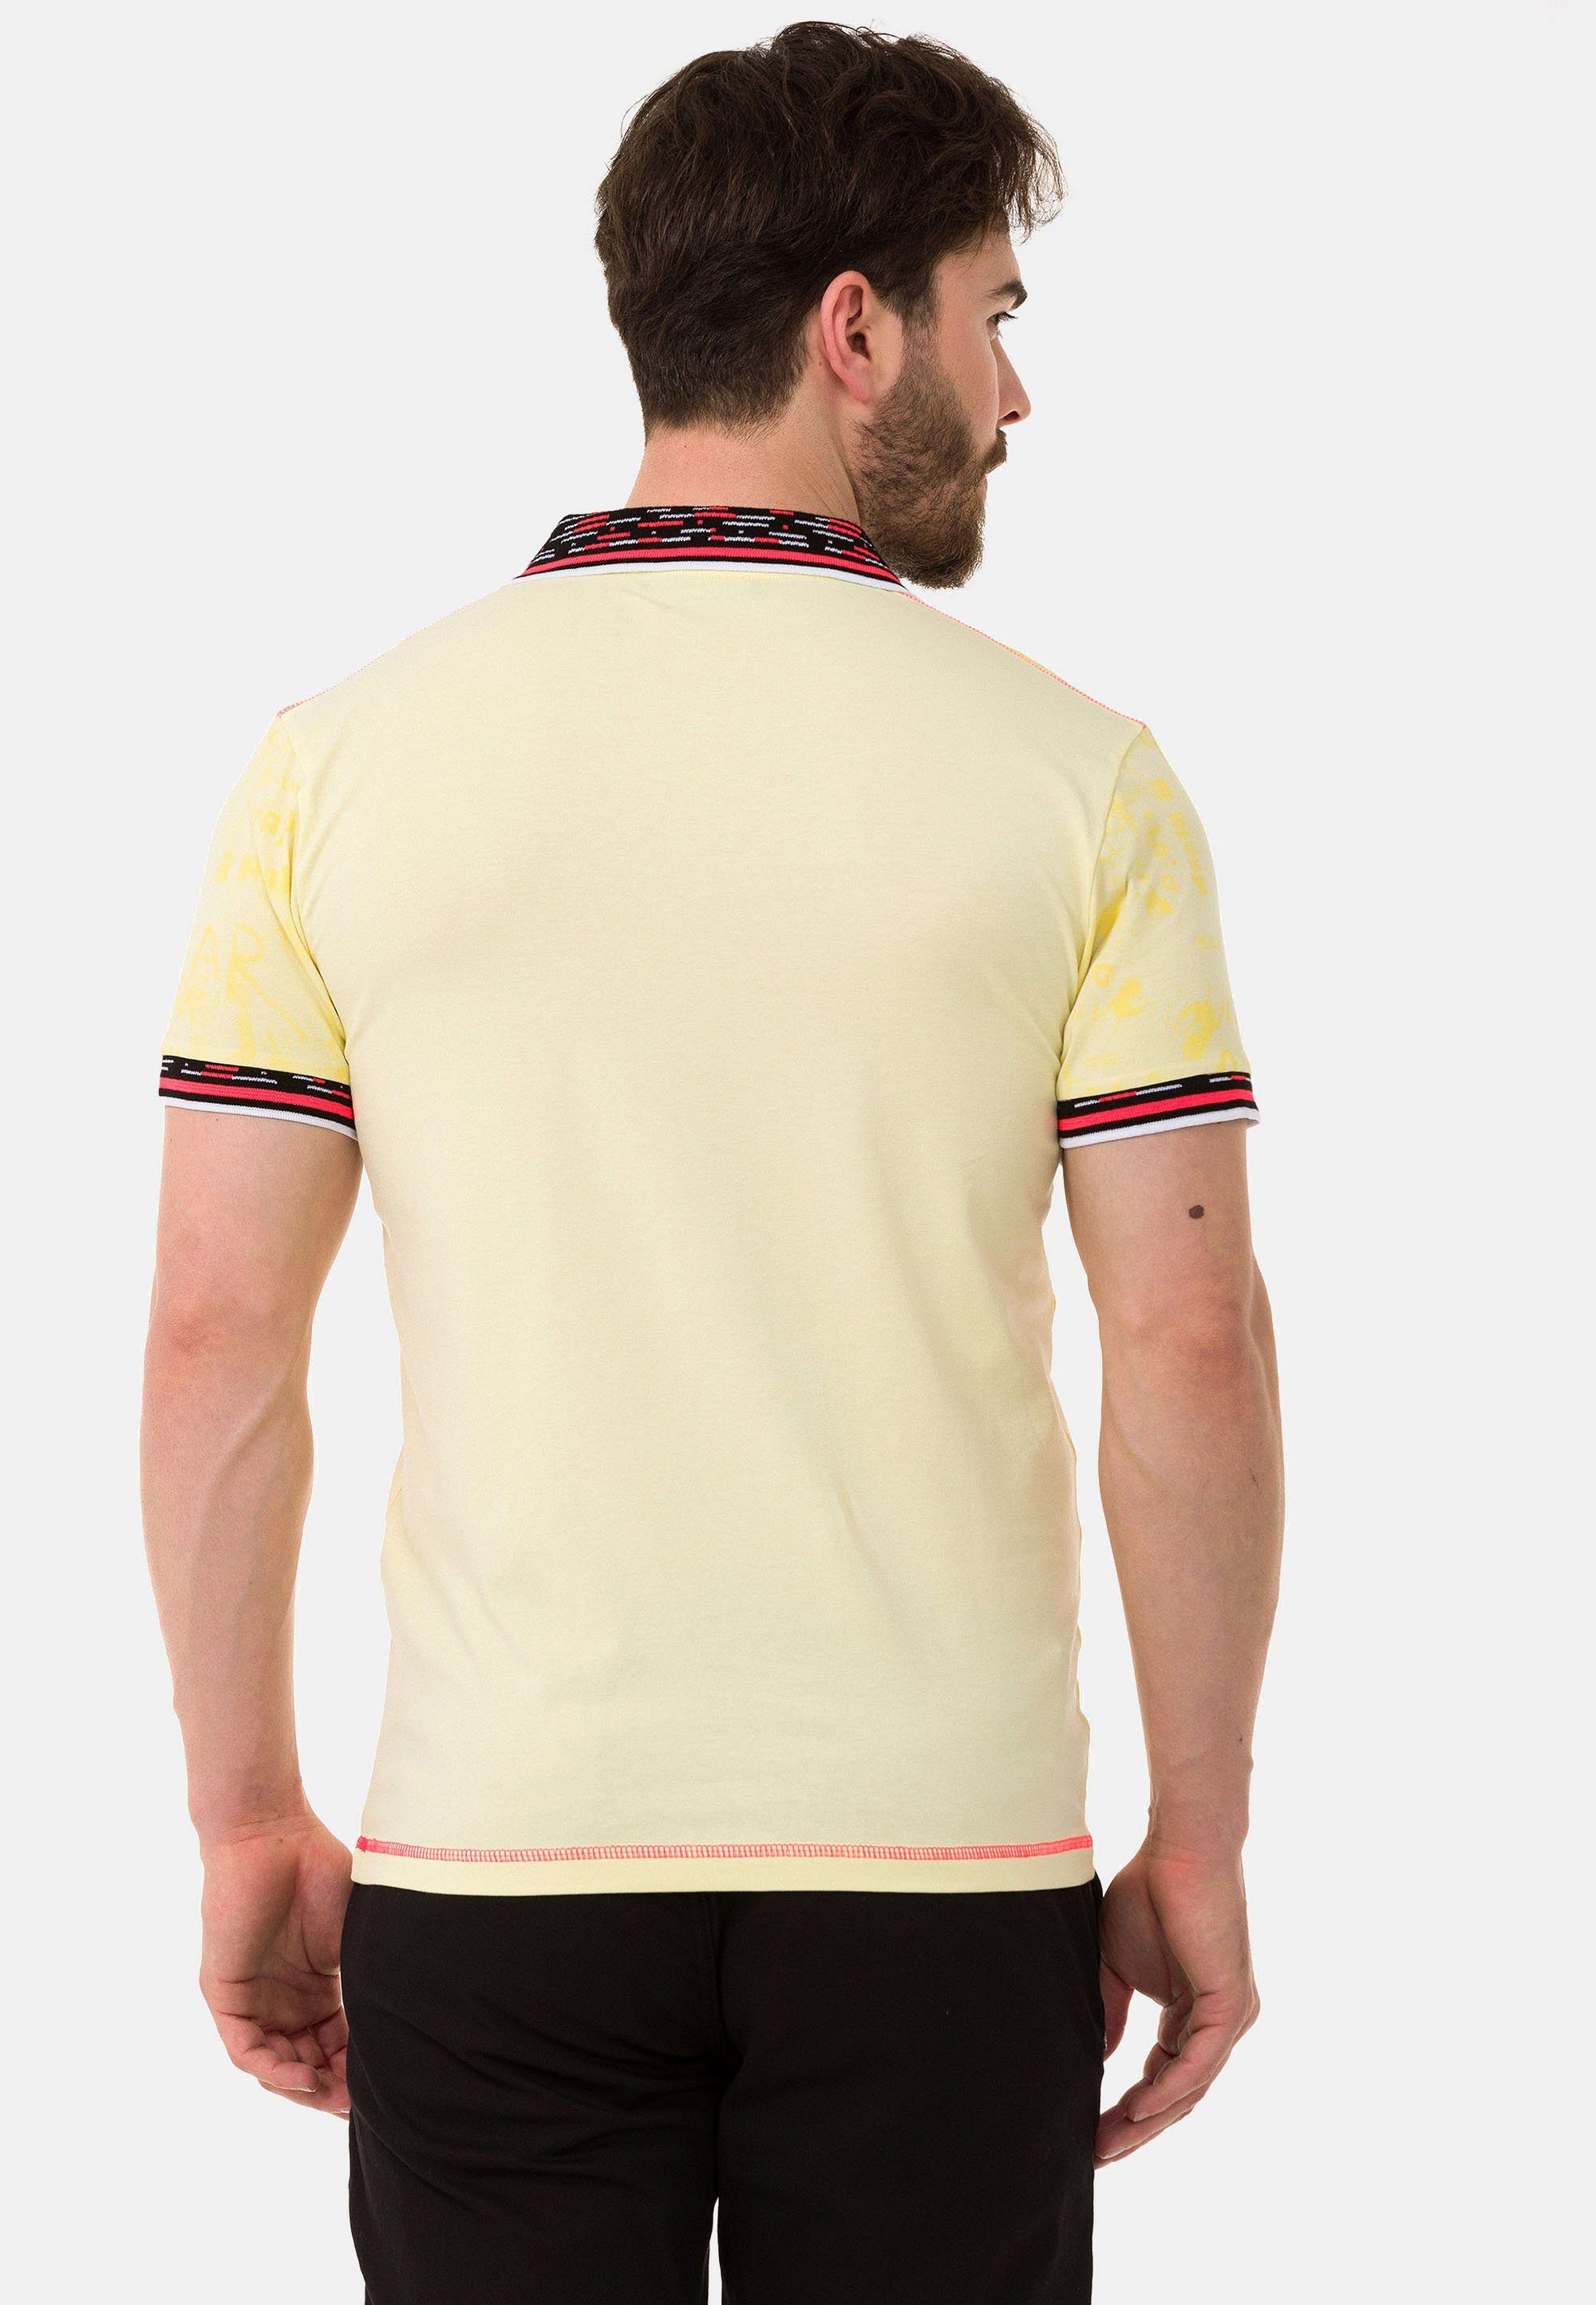 Baxx in Poloshirt Cipo & gelb coolem Polo-Design